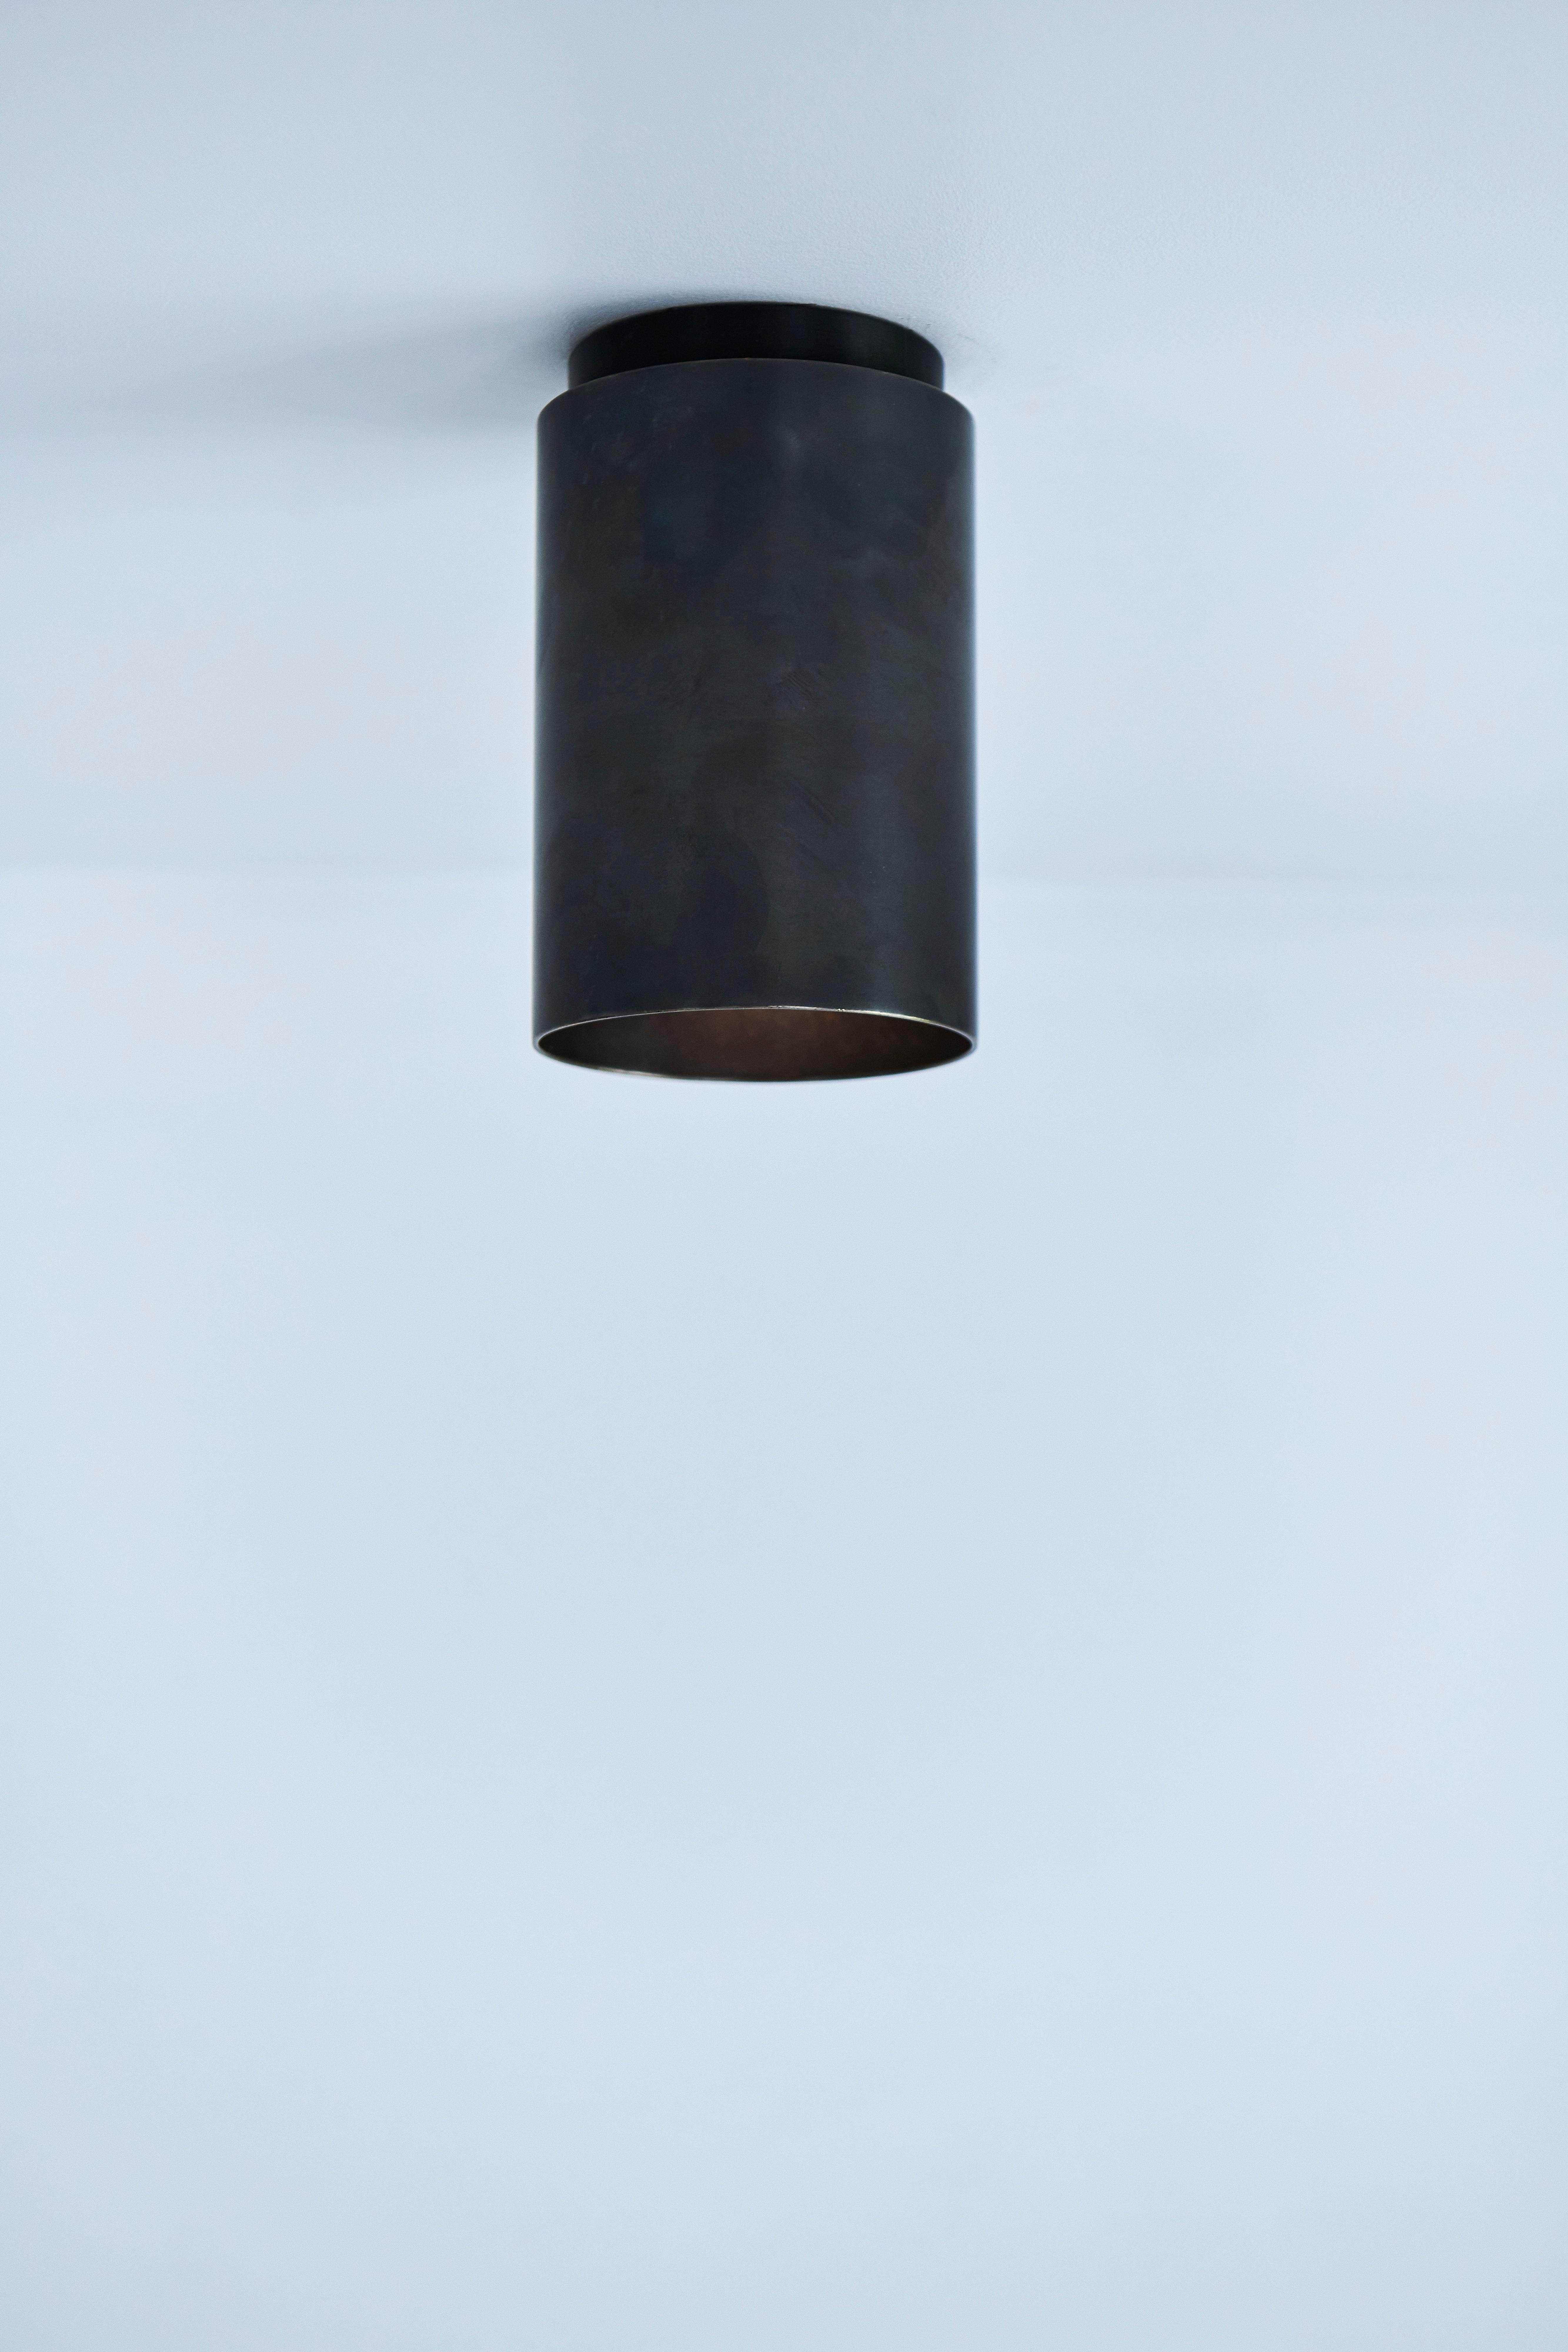 Contemporary Mott St Spot Light, Noir Blackened Brass, by DUNLIN For Sale